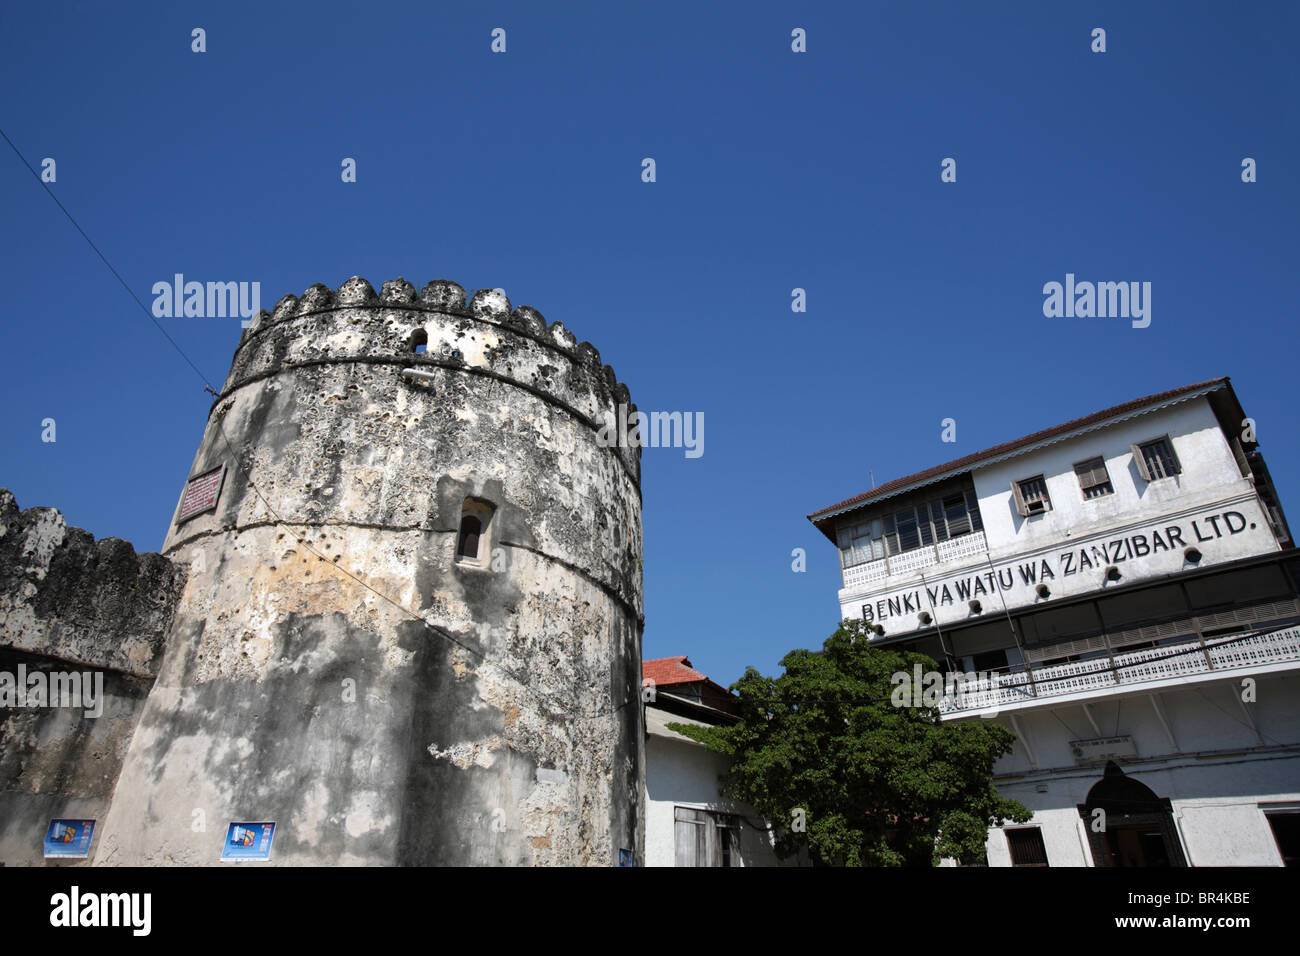 The old arab fort in Stone Town, Zanzibar, Tanzania Stock Photo